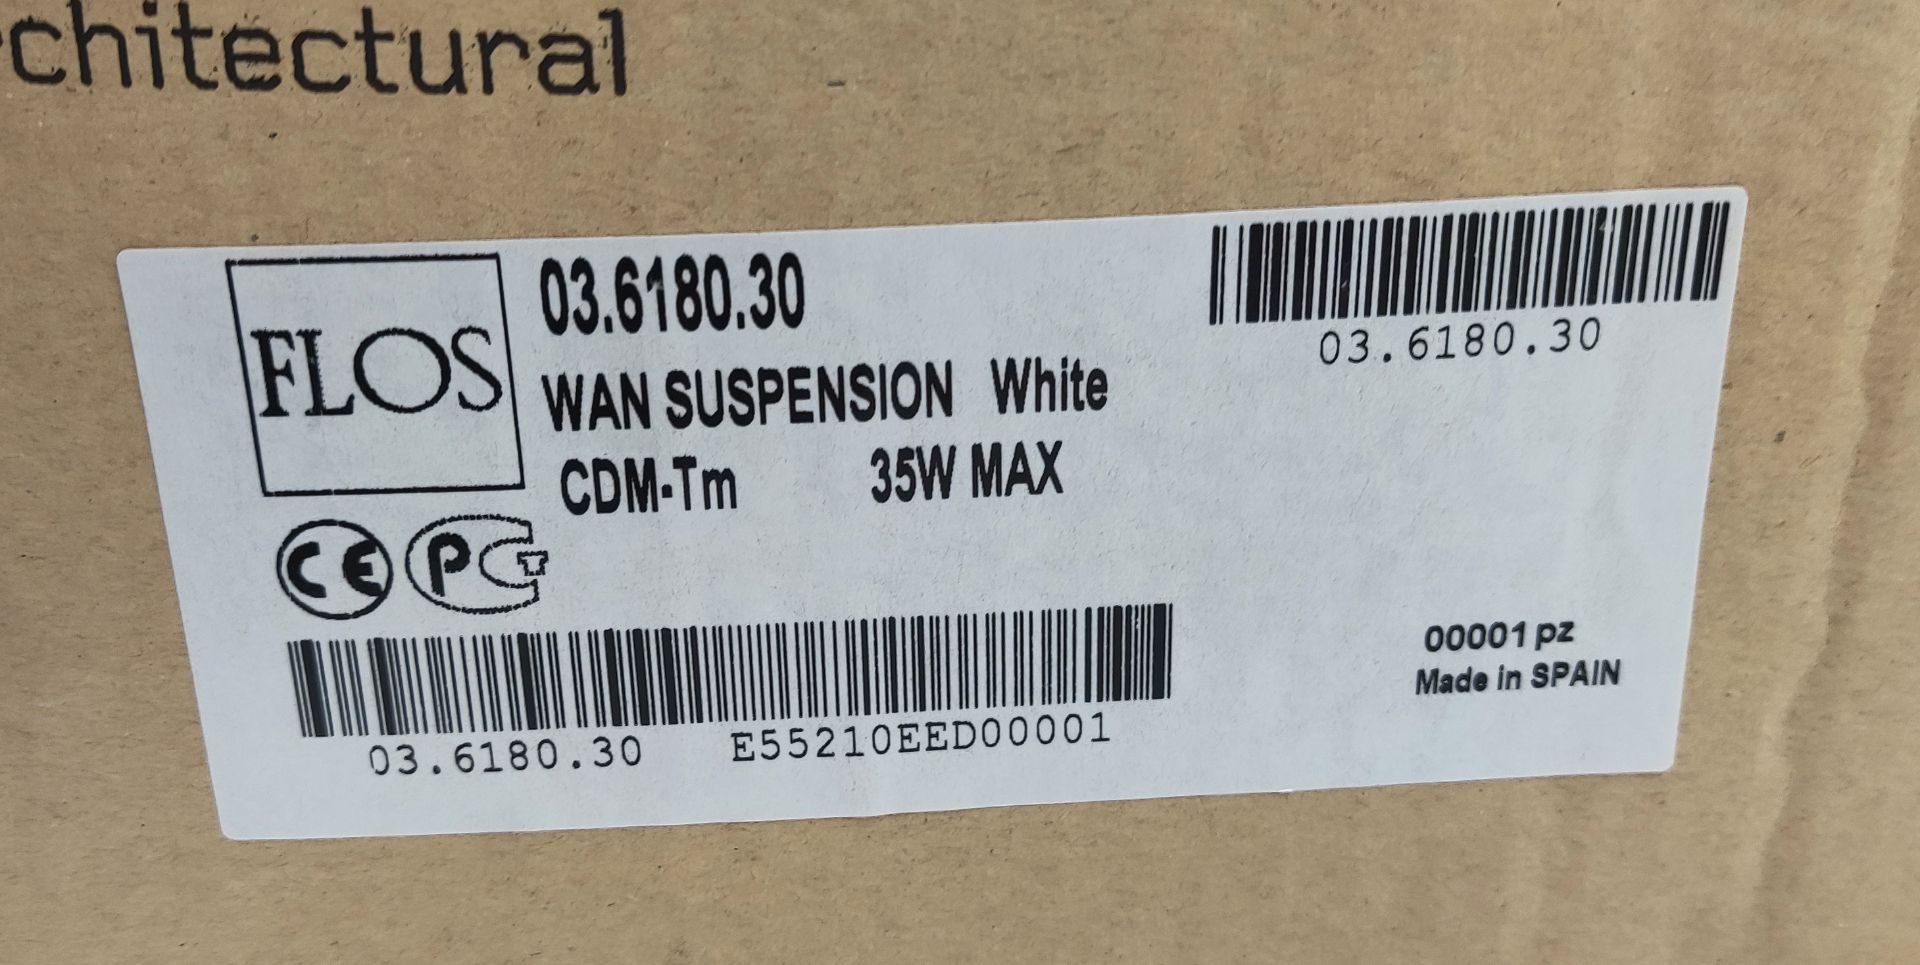 4 x FLOS Wan Suspension White Cdm-Tm 35W Max 03.6180.30 - RRP £636 - Ref: ATR152/1-4/ATRPB - - Image 23 of 23